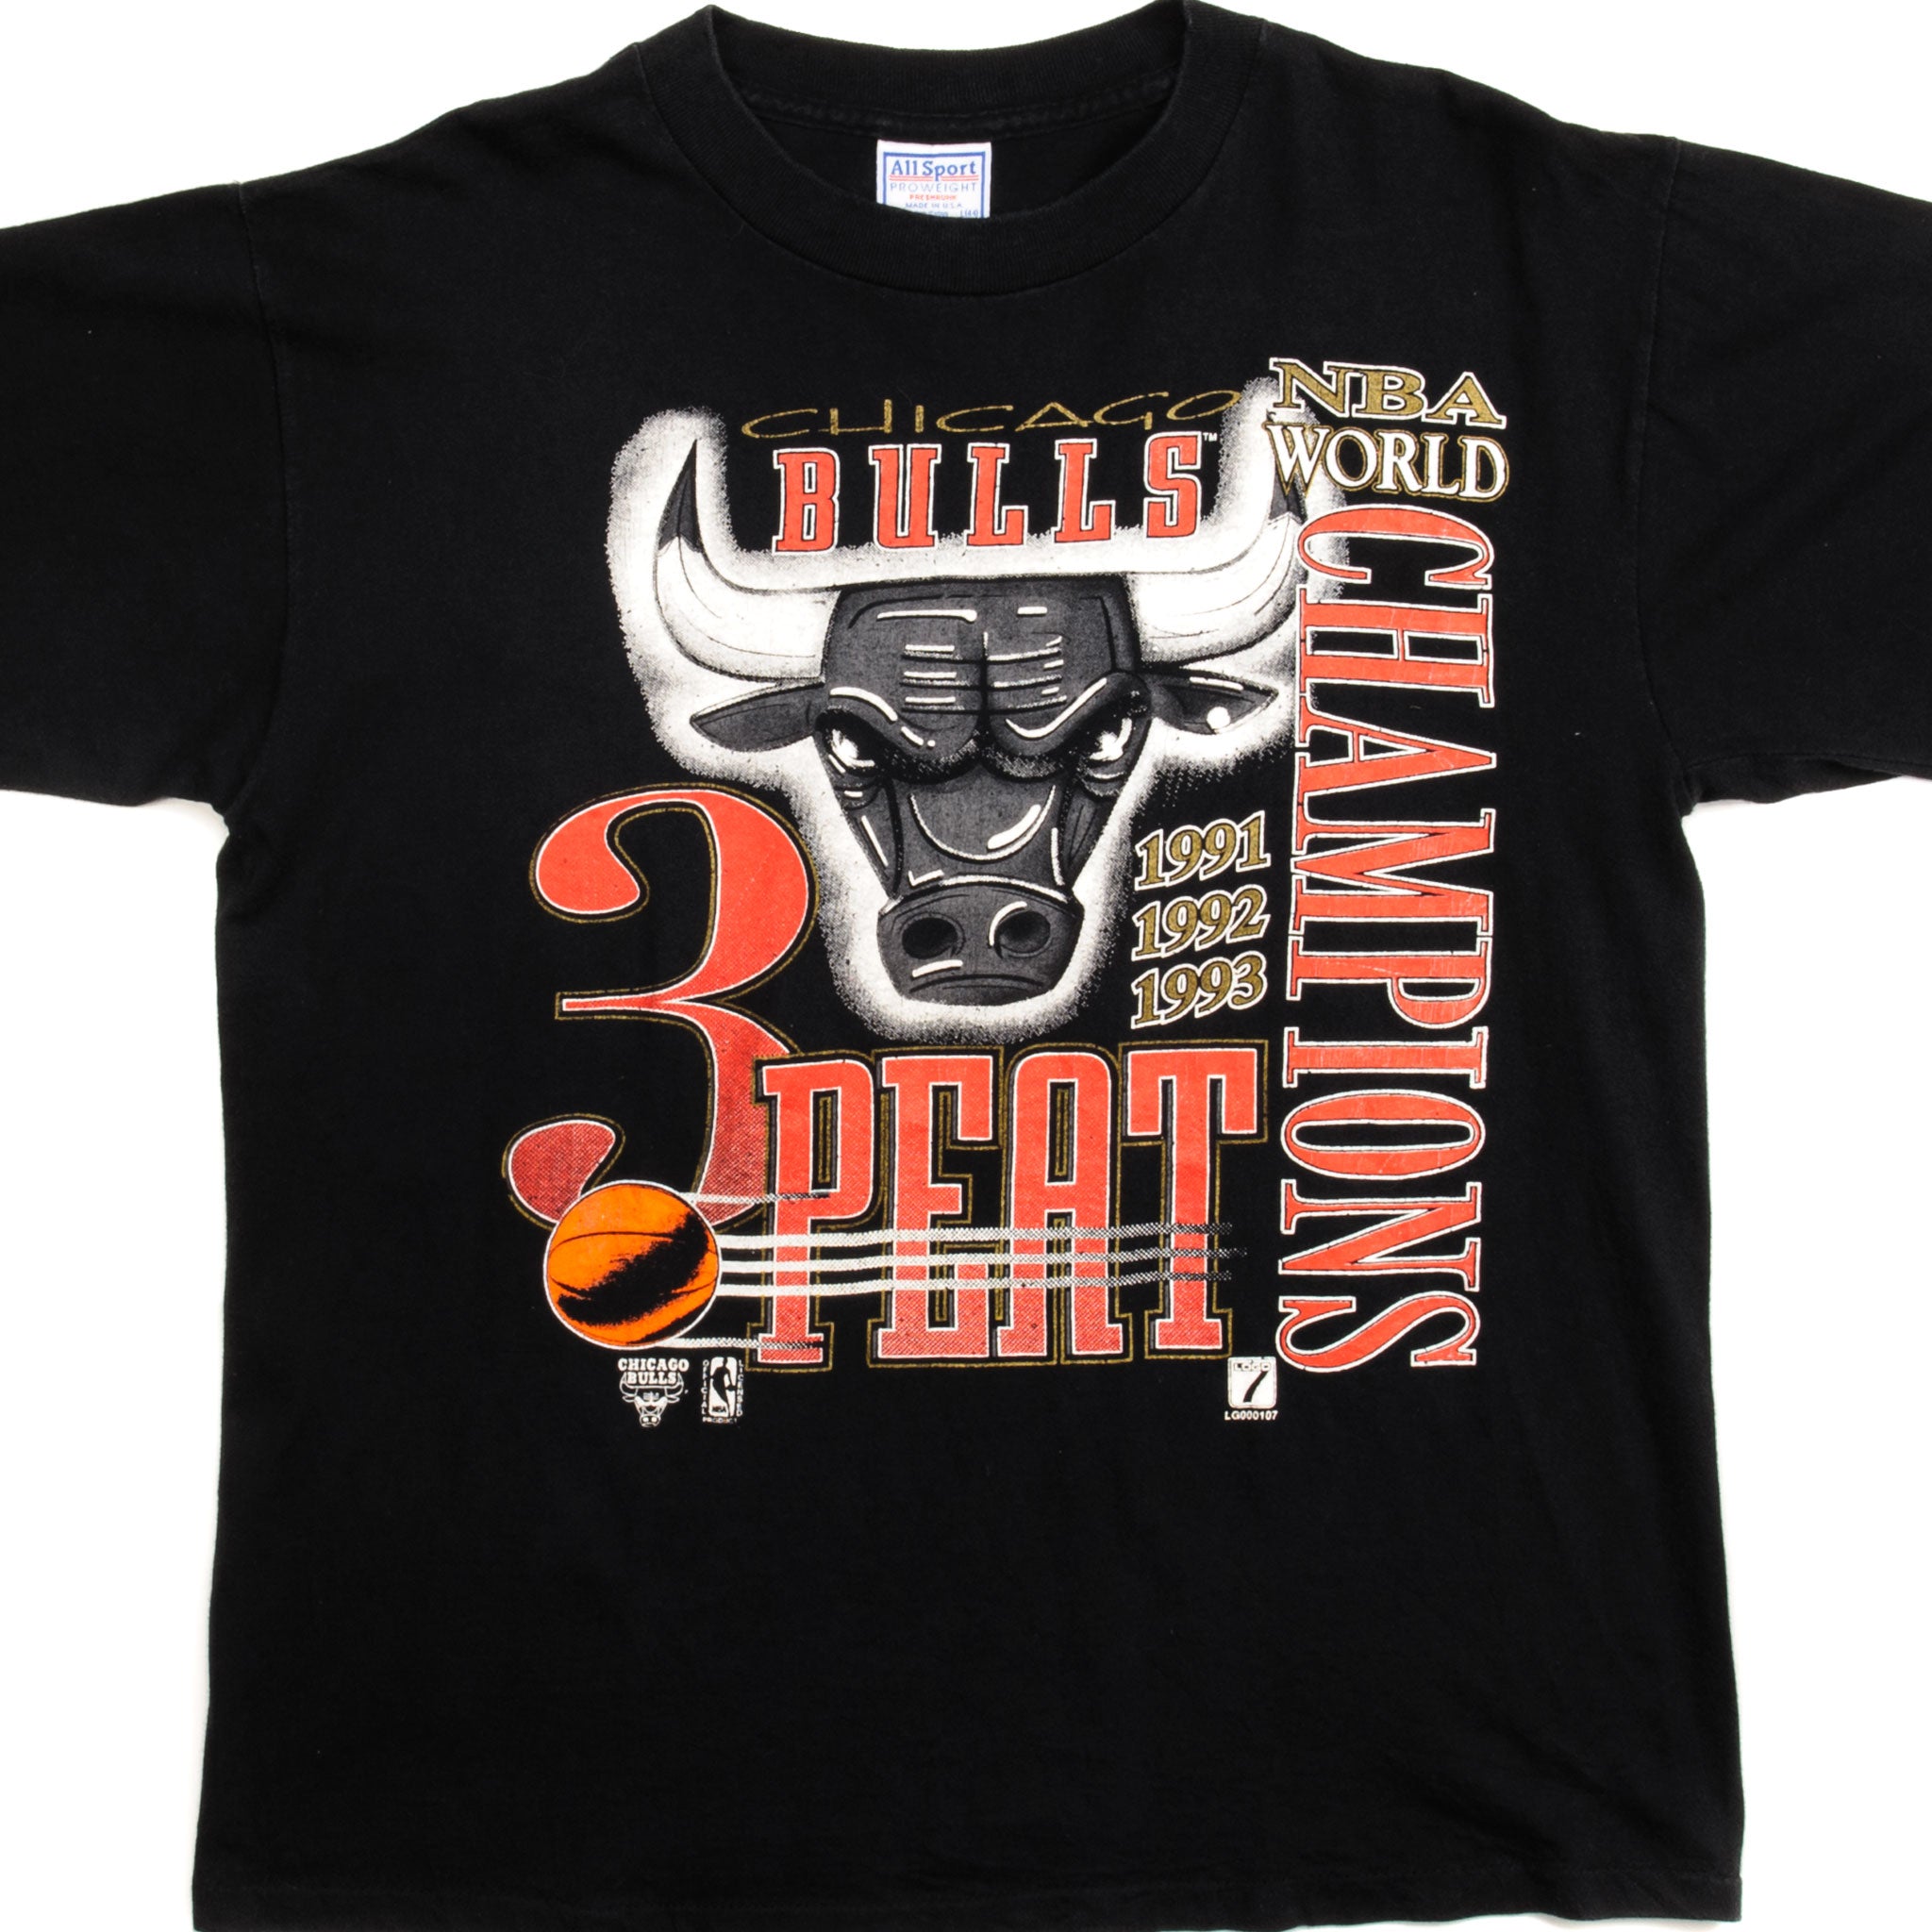 Vintage NBA Chicago Bulls World Champions Shirt, Basketball Shirt